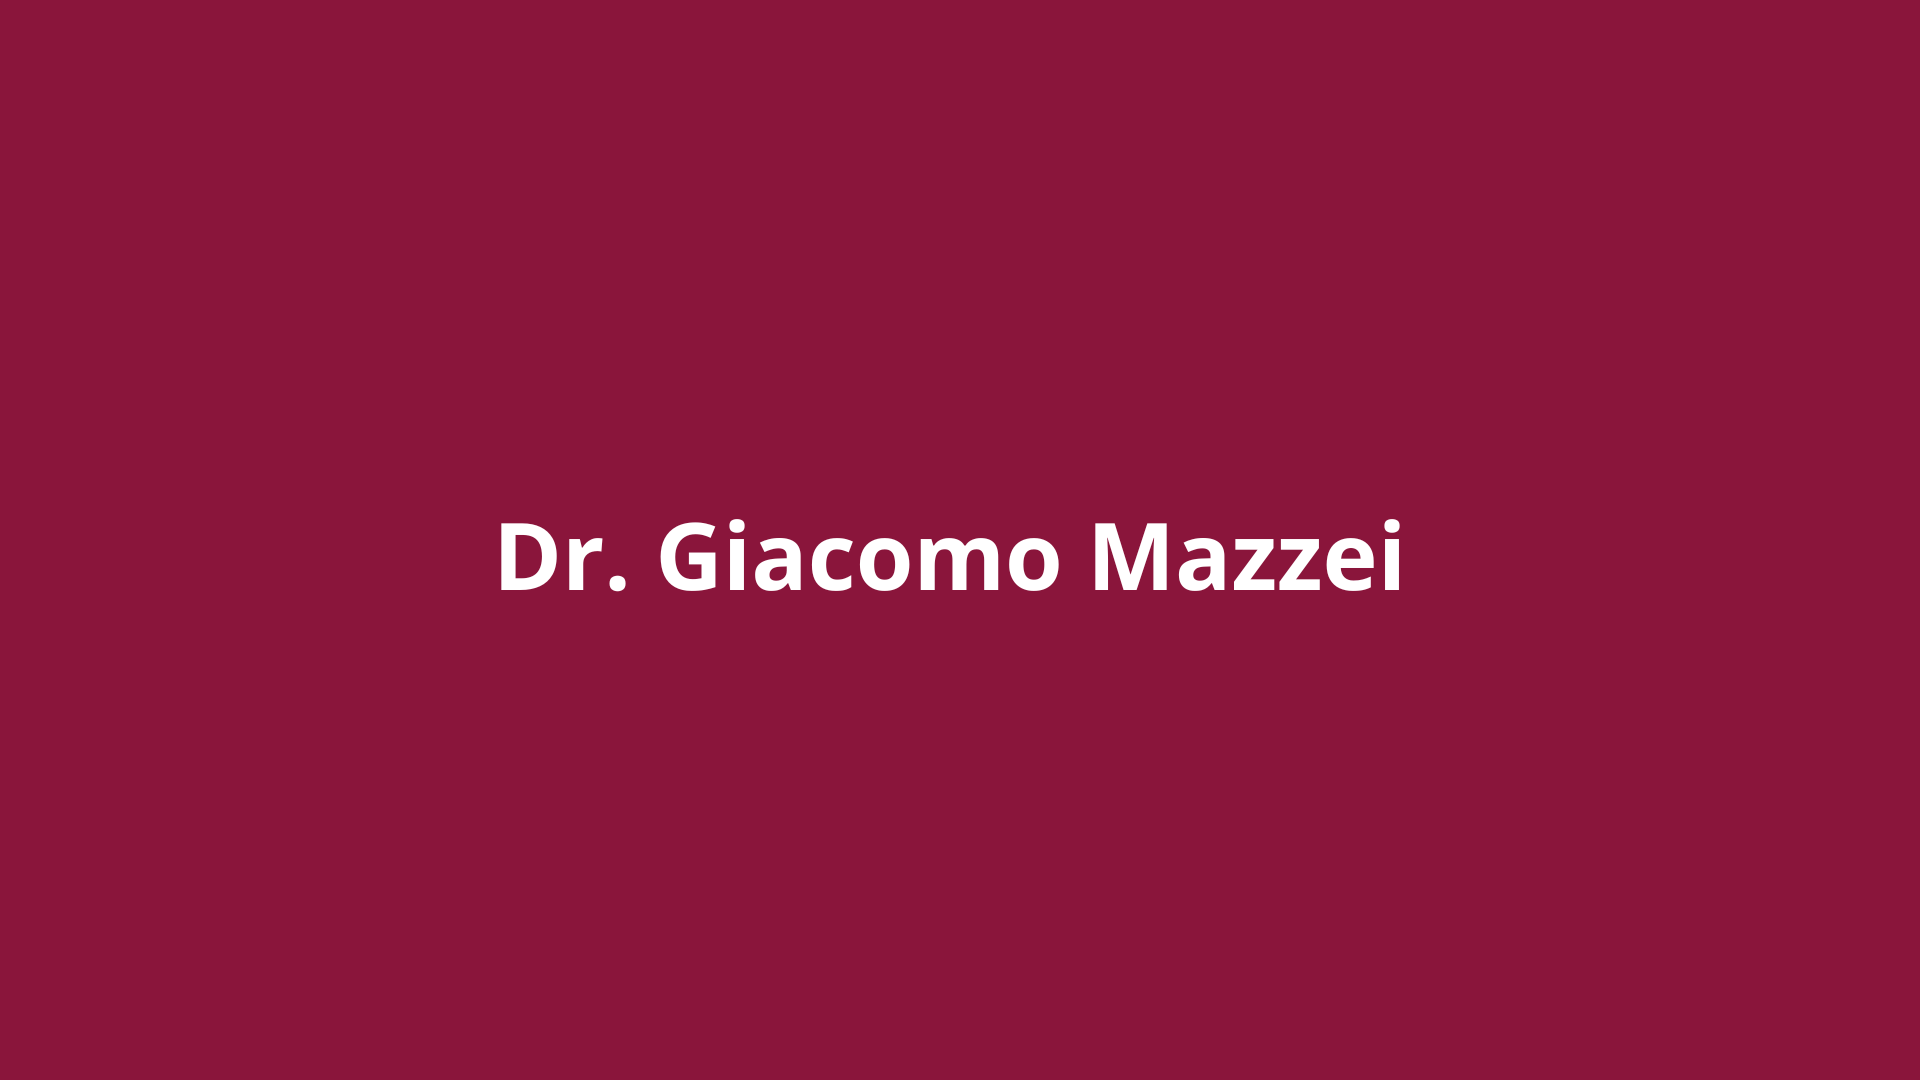 Dr. Giacomo Mazzei